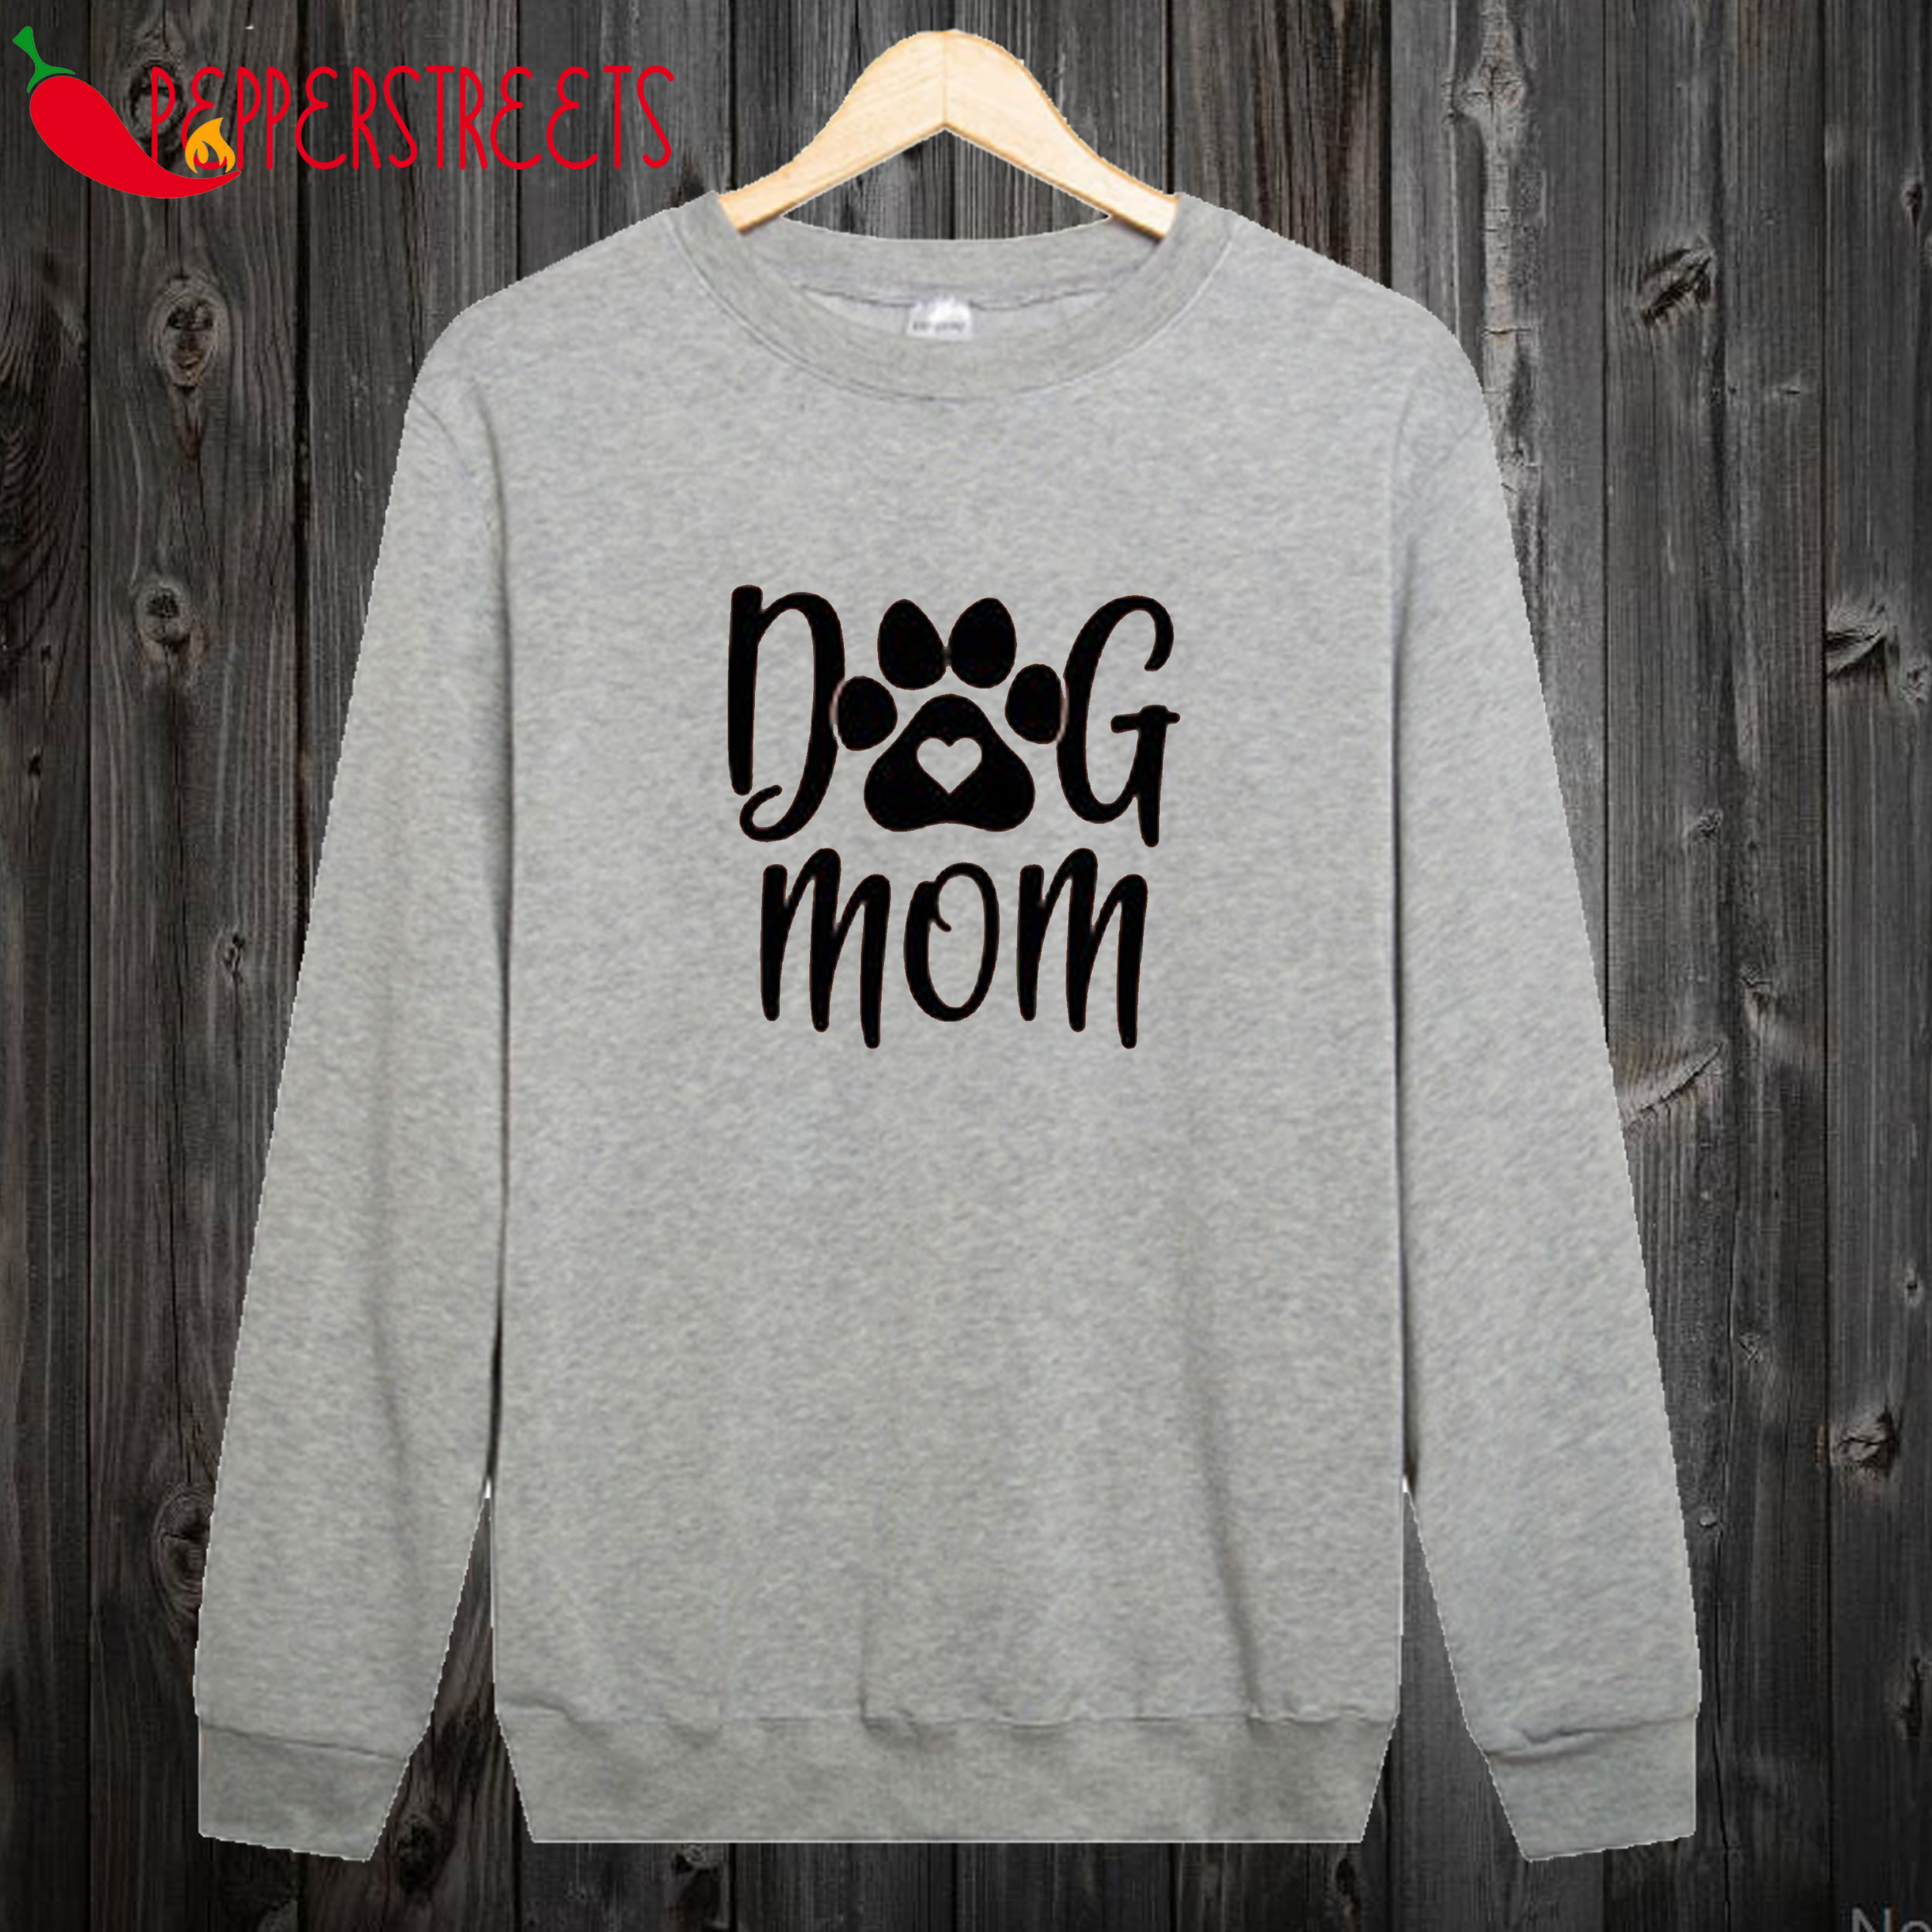 Dog Lover Gifts Sweatshirt